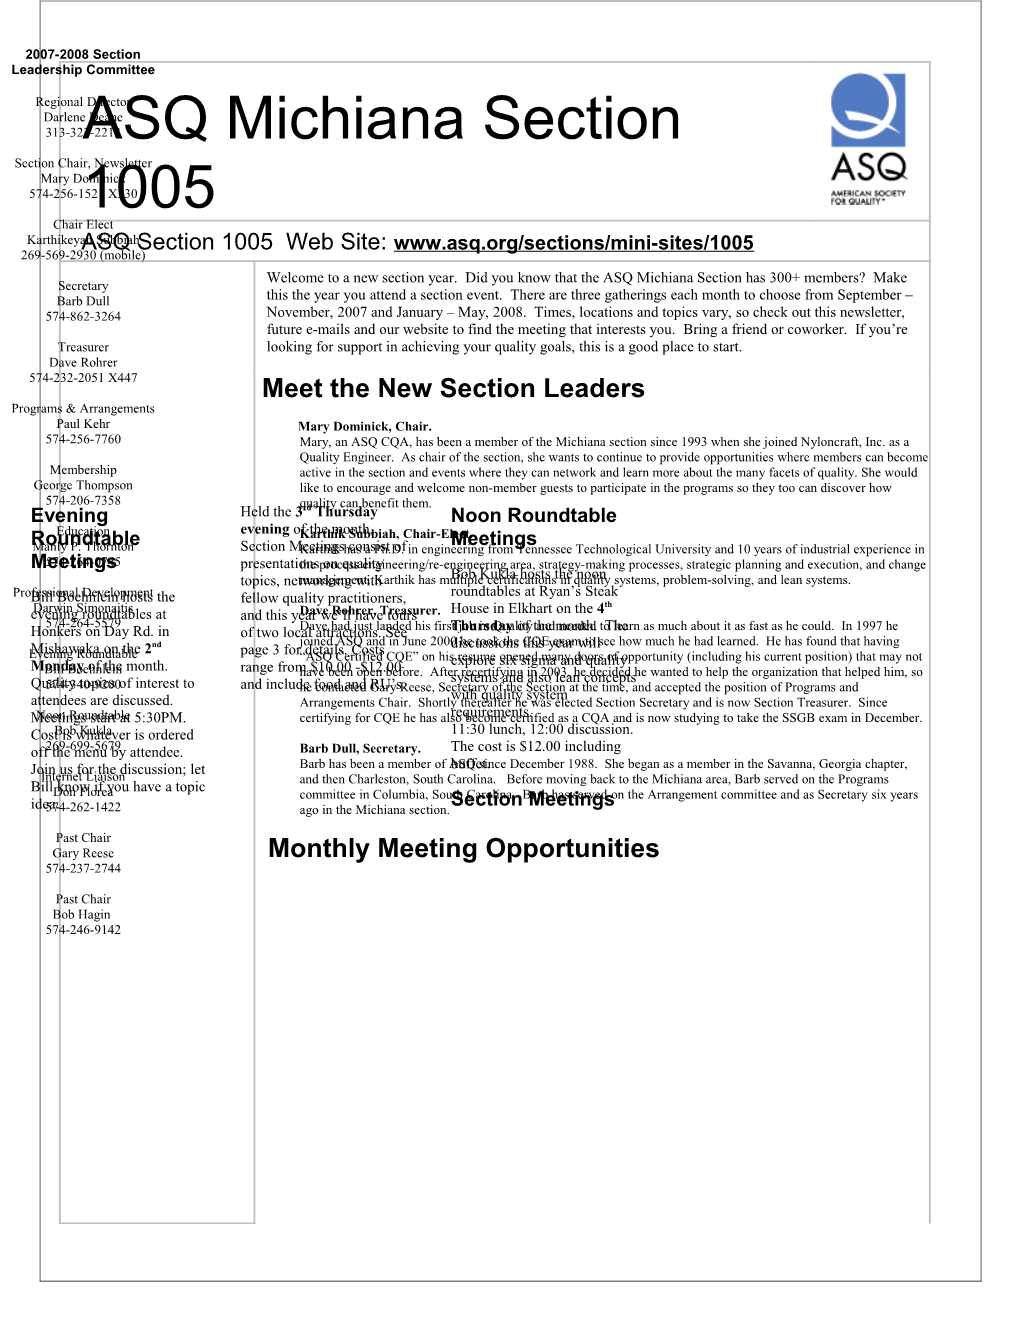 ASQ Michiana Section 1005